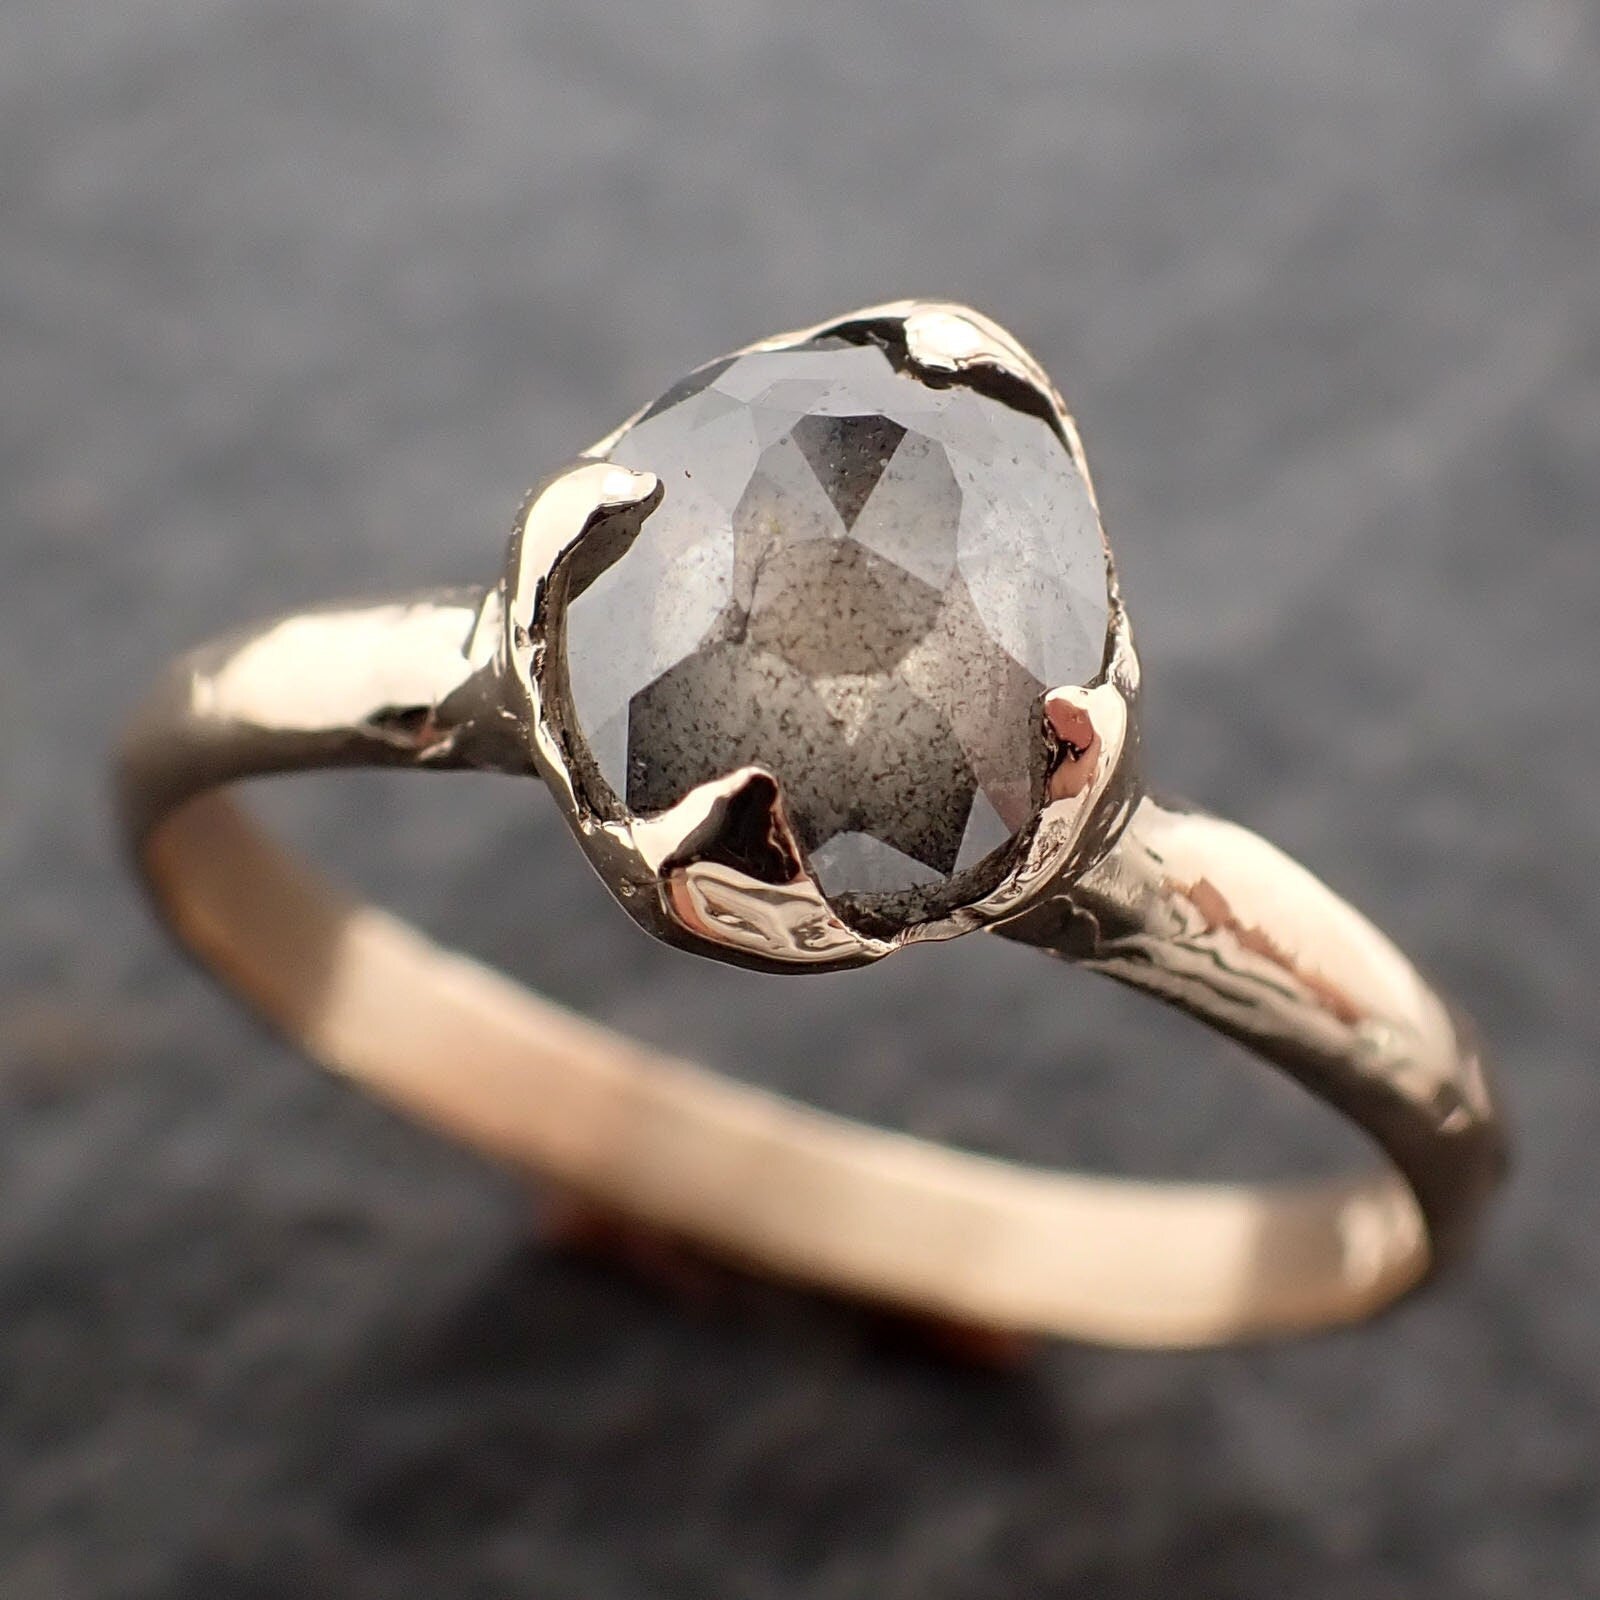 Fancy cut salt and pepper Diamond Solitaire Engagement 14k yellow Gold Wedding Ring Diamond Ring byAngeline 2769